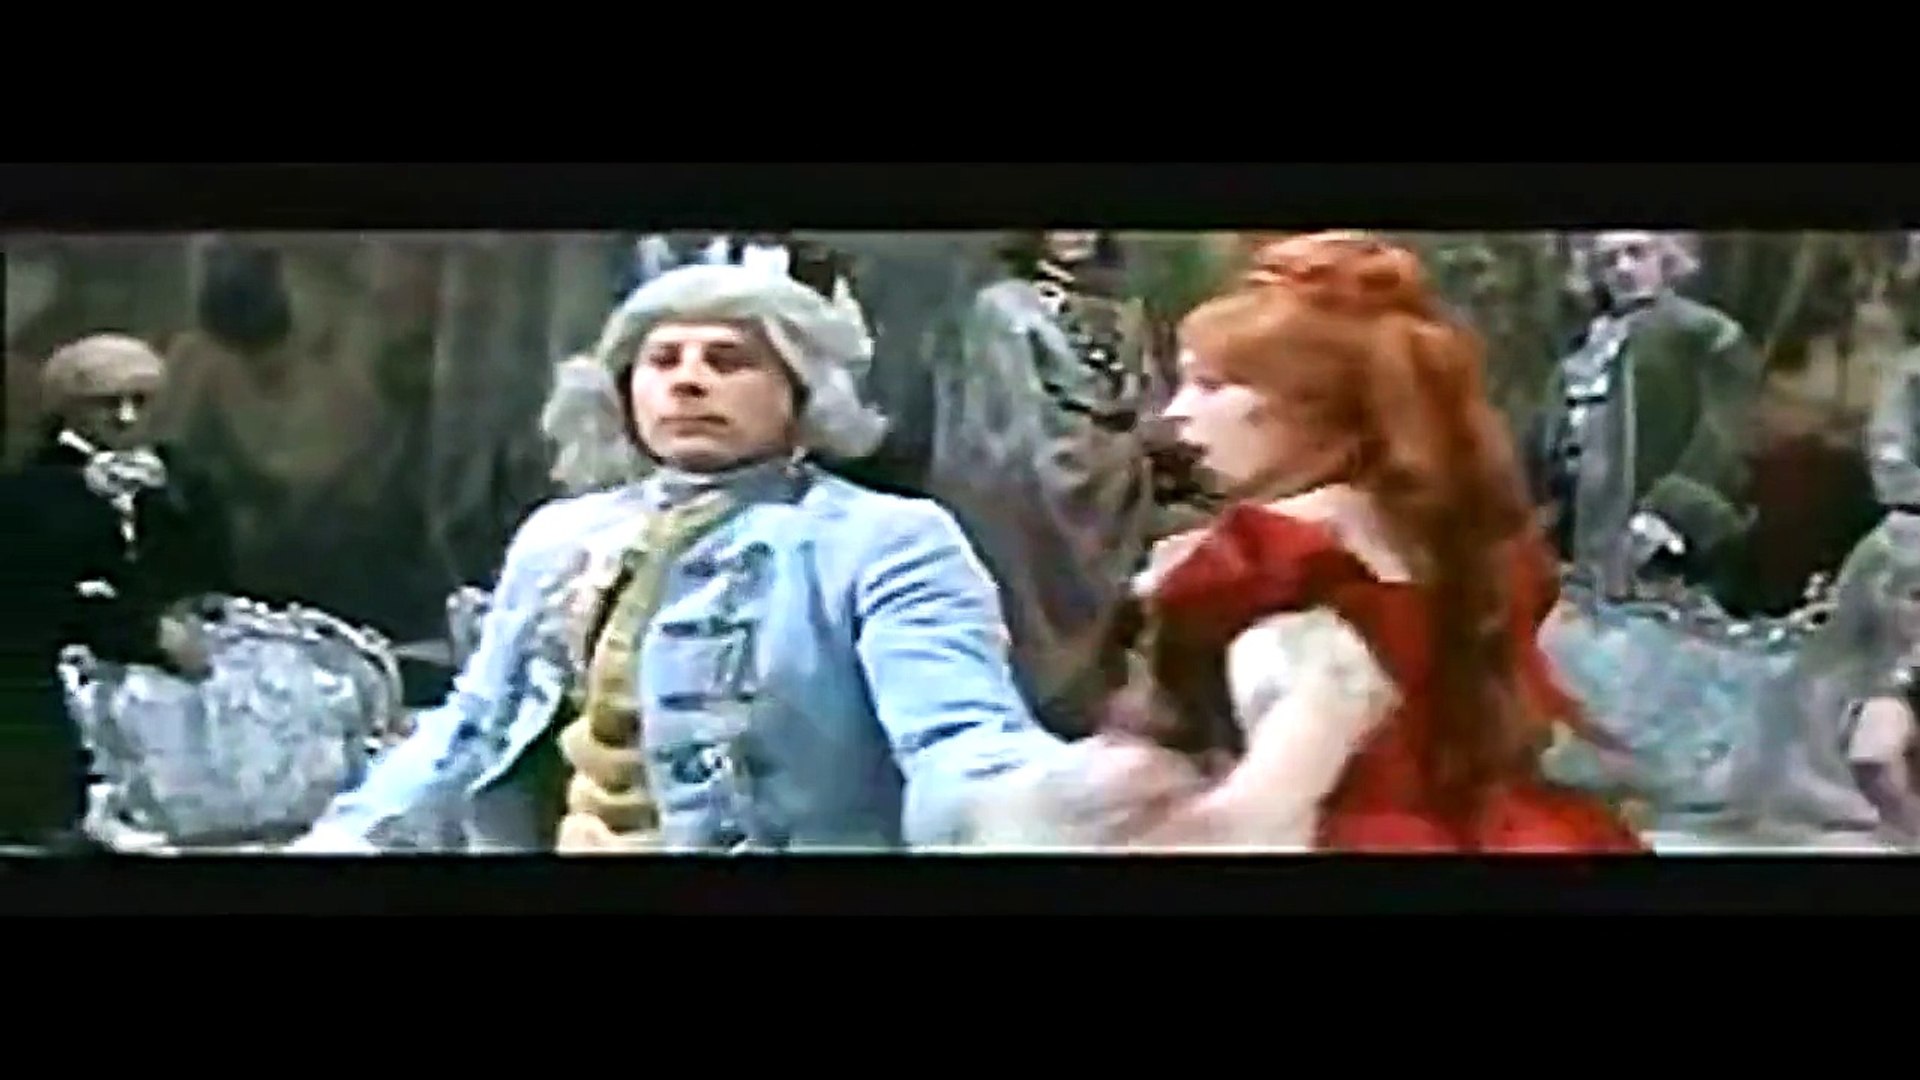 Le bal des vampires » de Roman Polanski (1697) - Vidéo Dailymotion